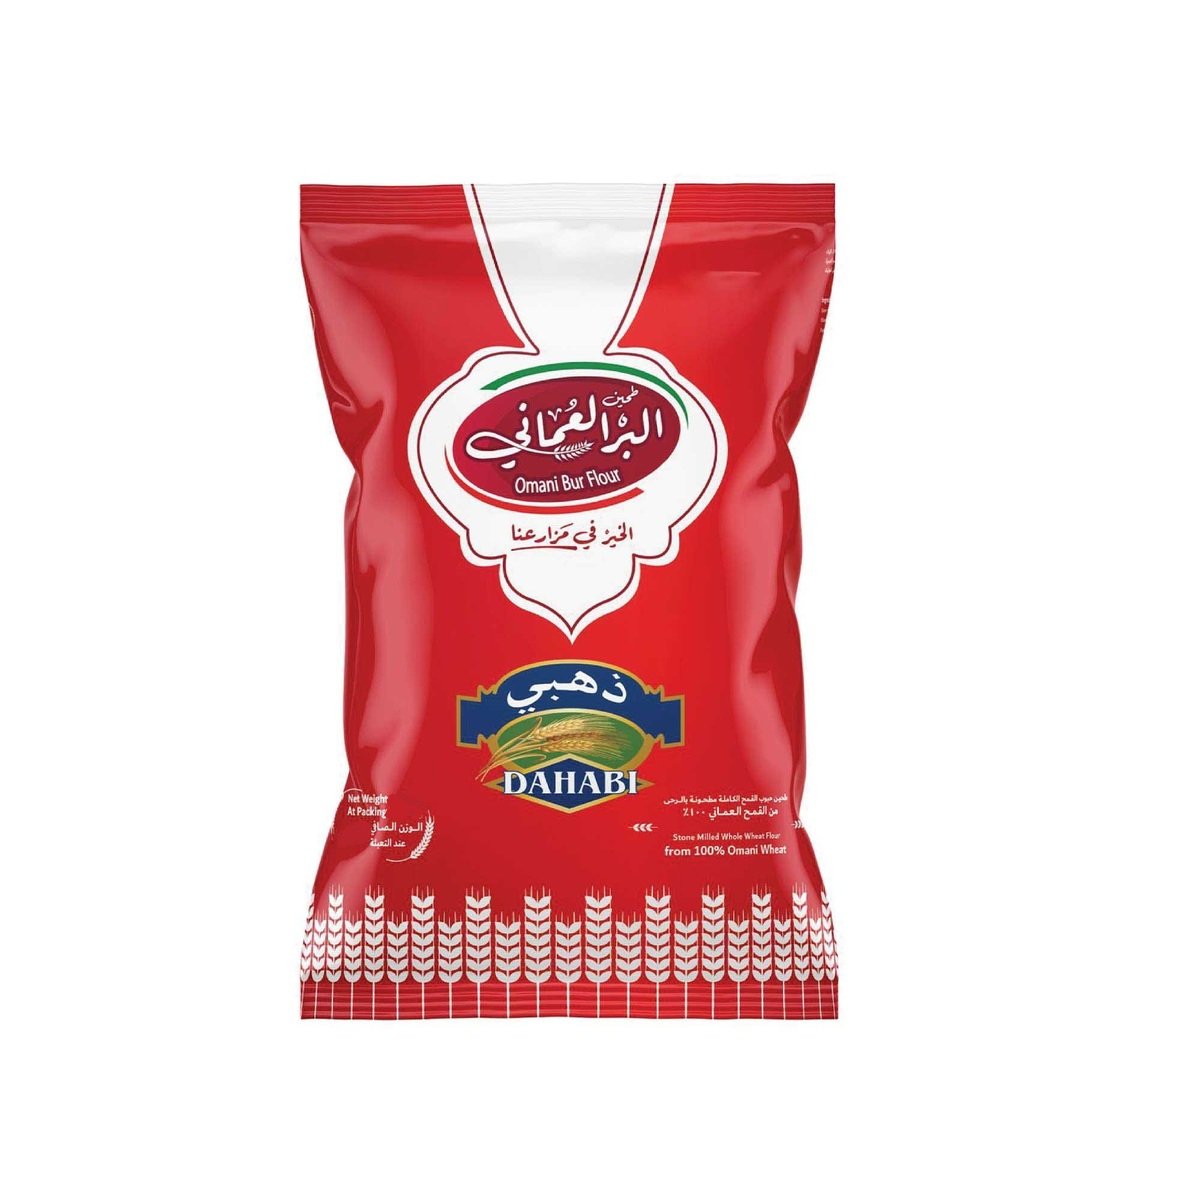 Dahabi Omani Bur Flour, 2 kg